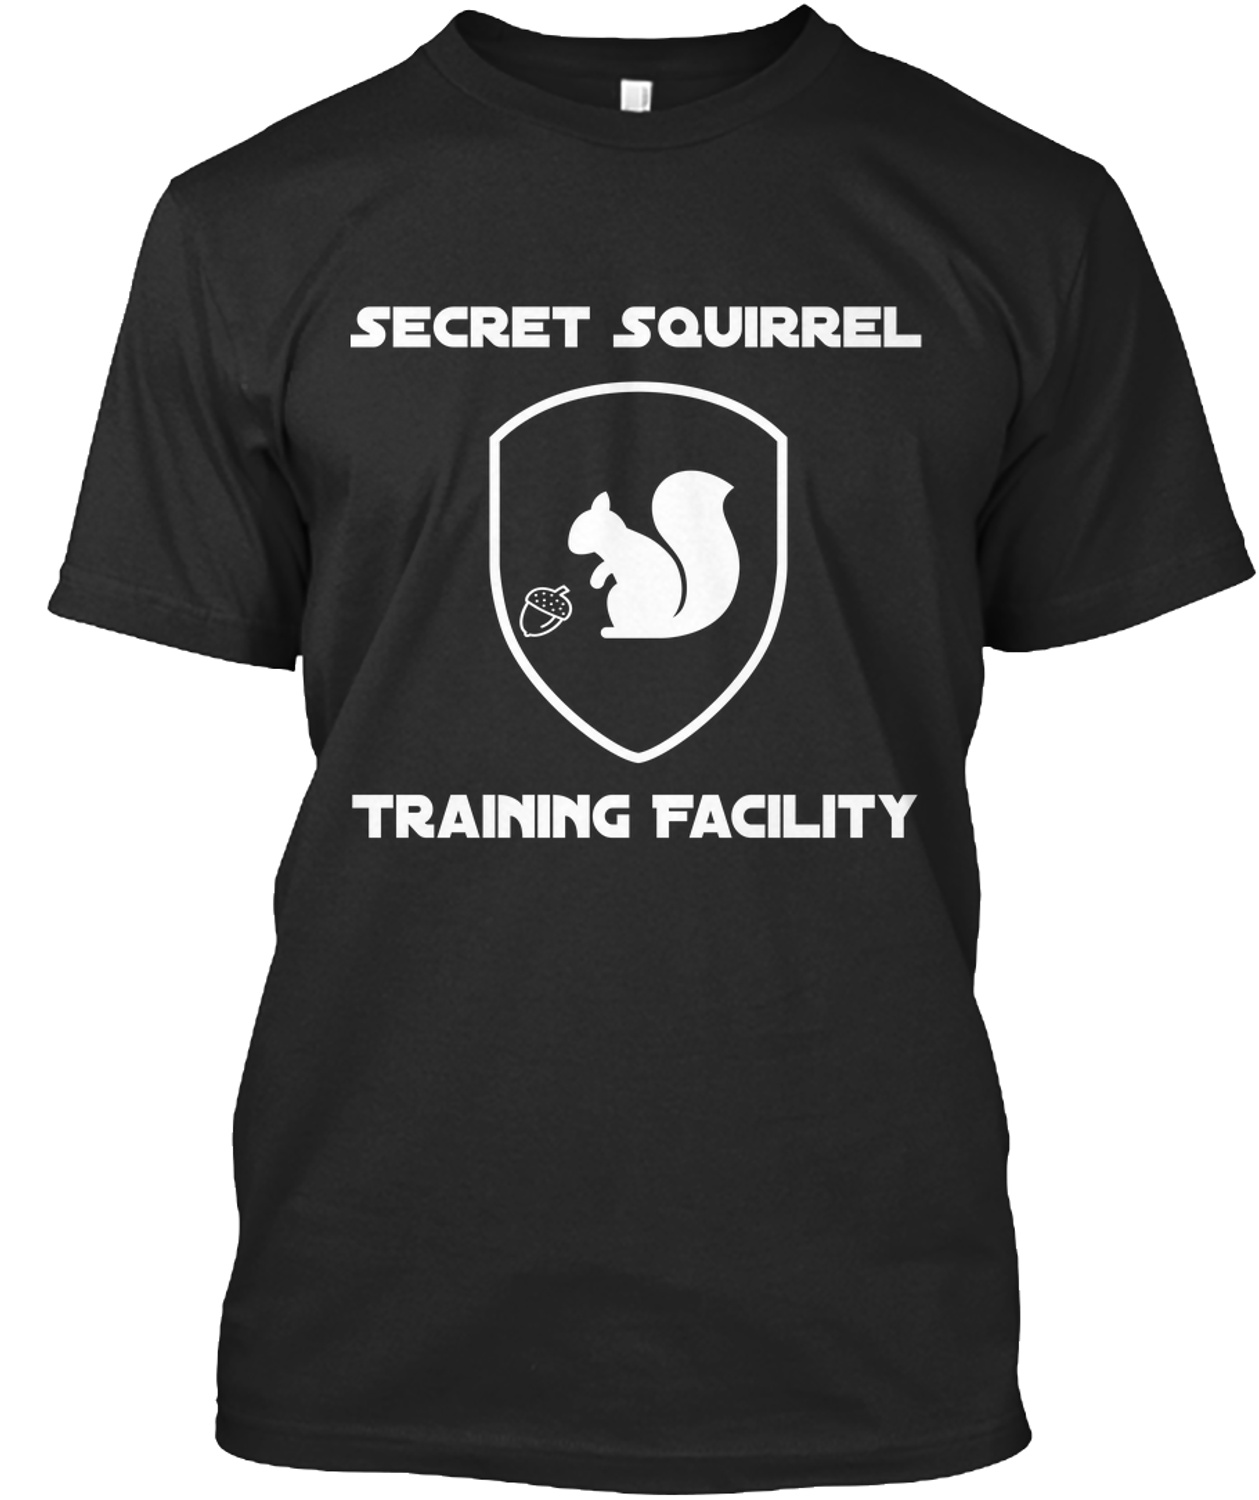 Lokken Onhandig Gymnast Teespring Secret Squirrel Training Facility Comfort T-Shirt - 100% Cotton |  eBay